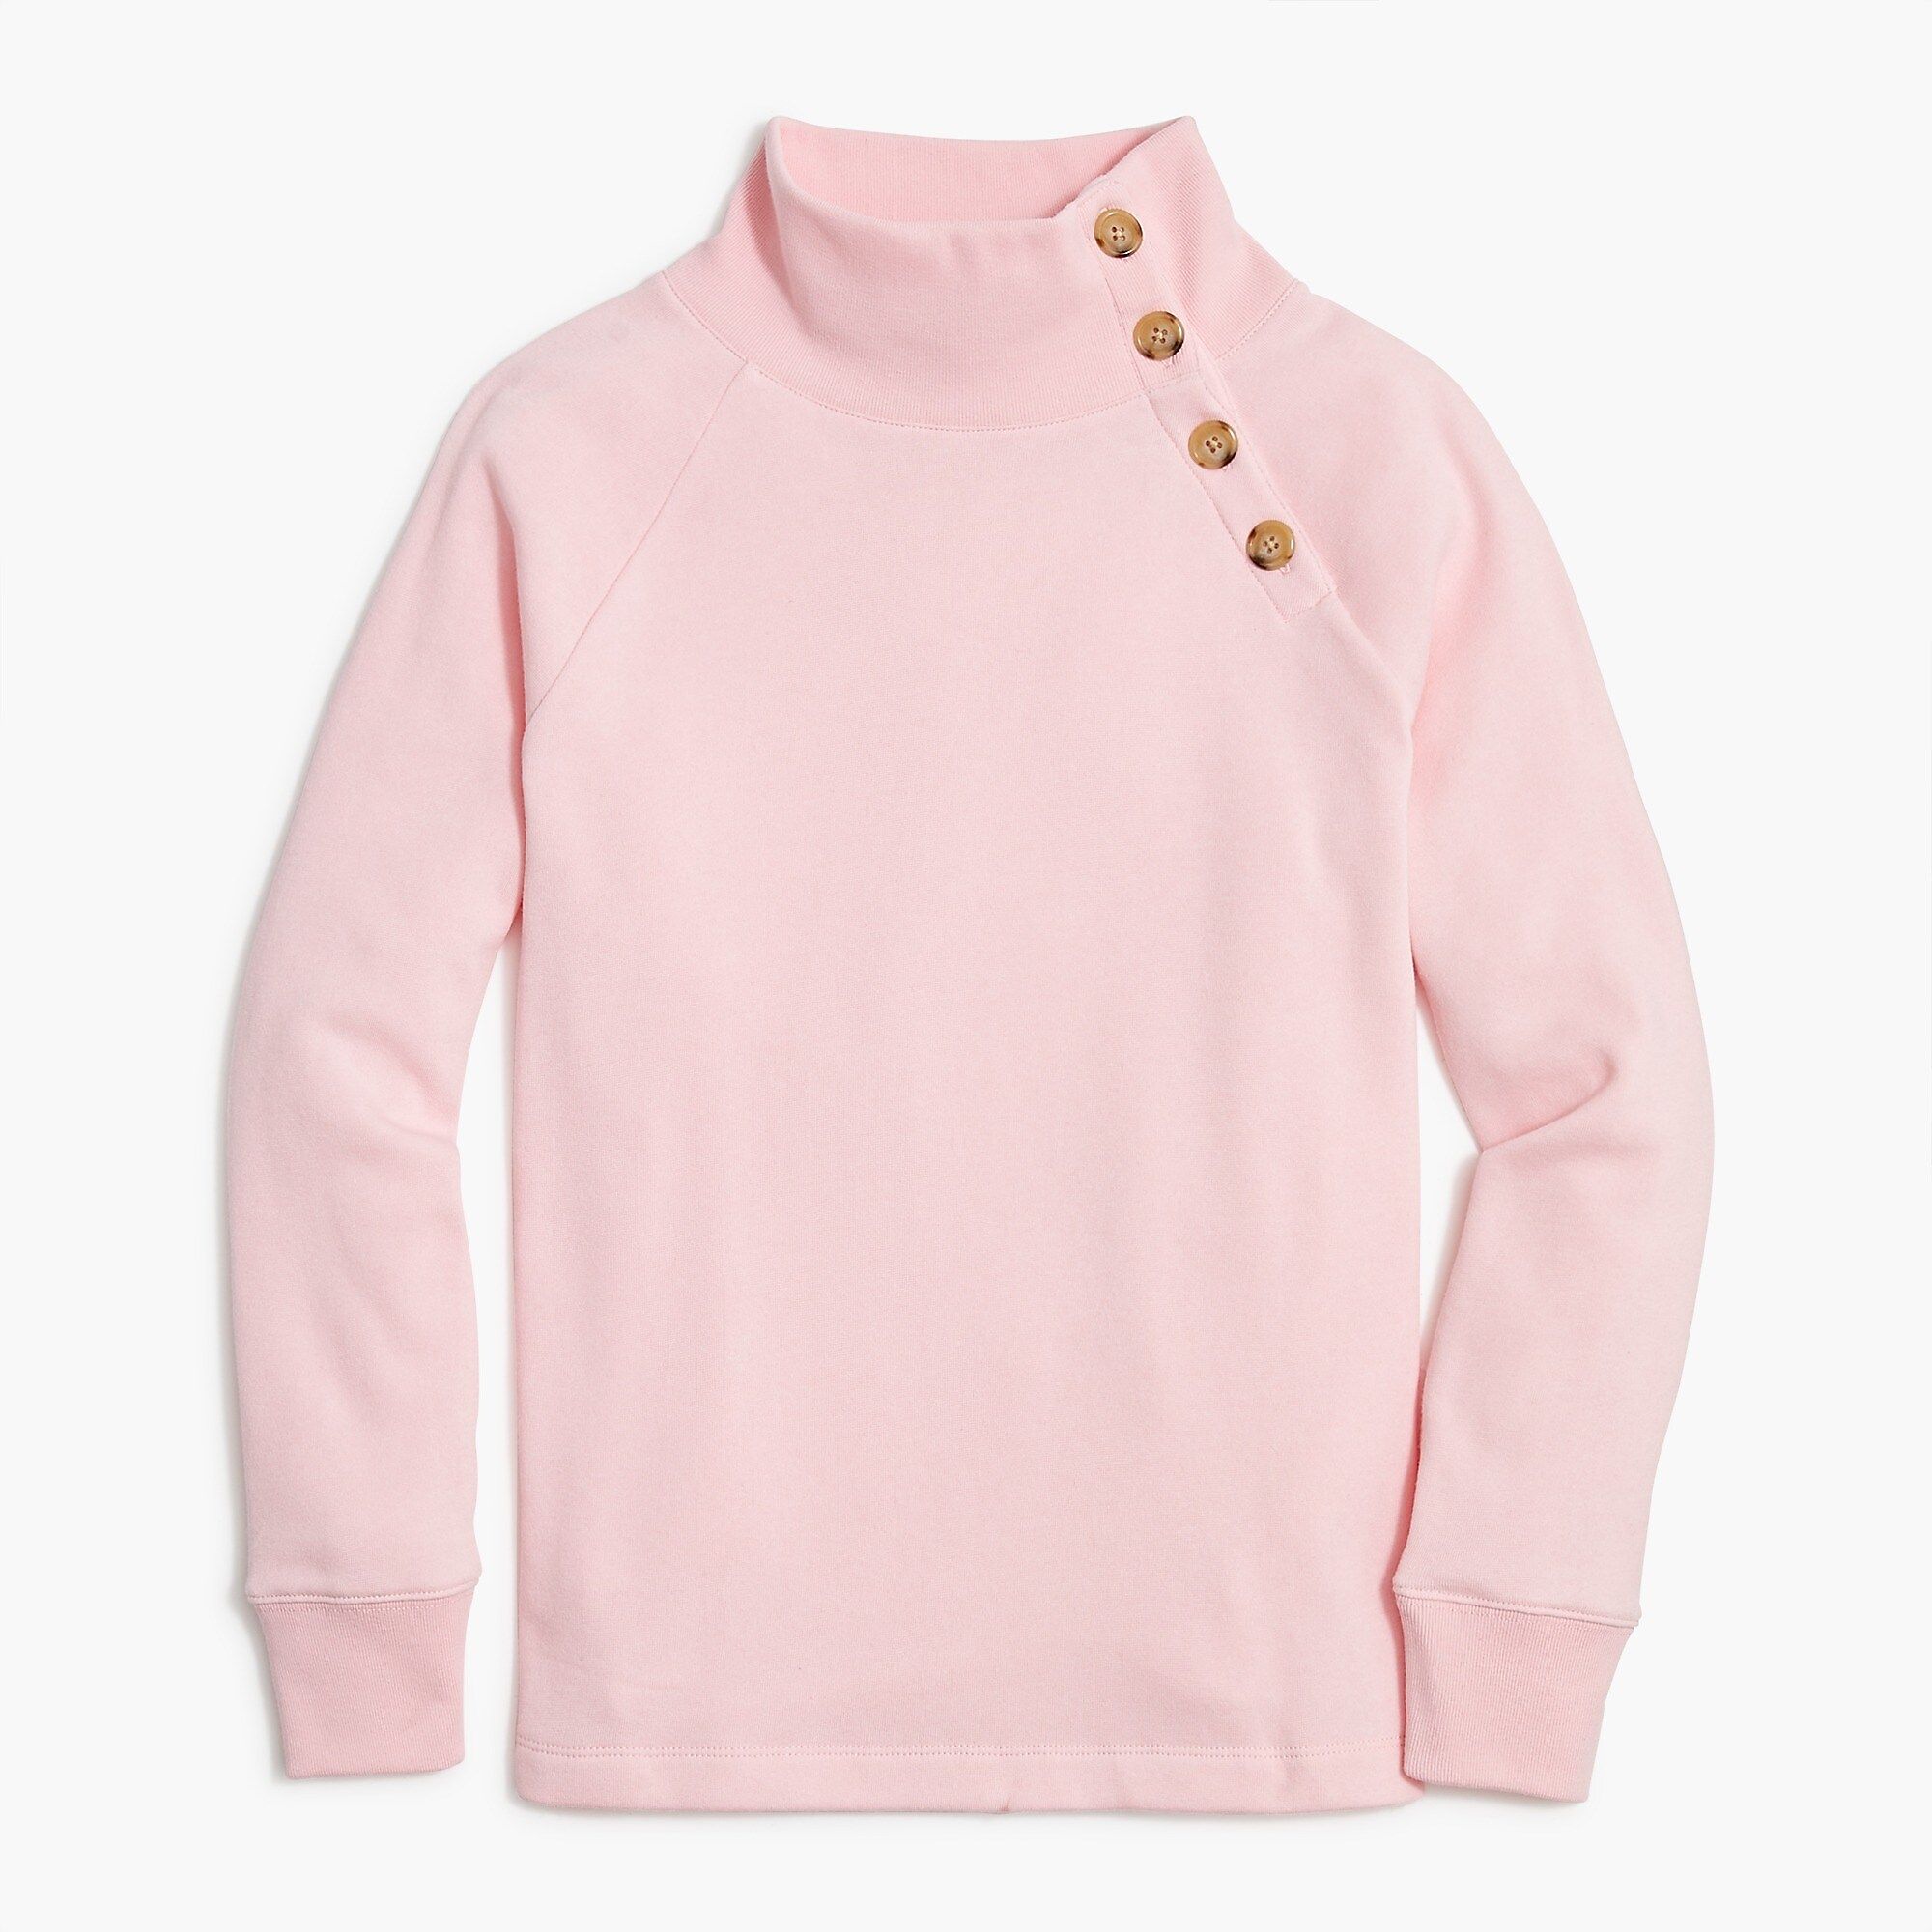 Wide button-collar tunic sweatshirt in cloudspun fleece | J.Crew Factory